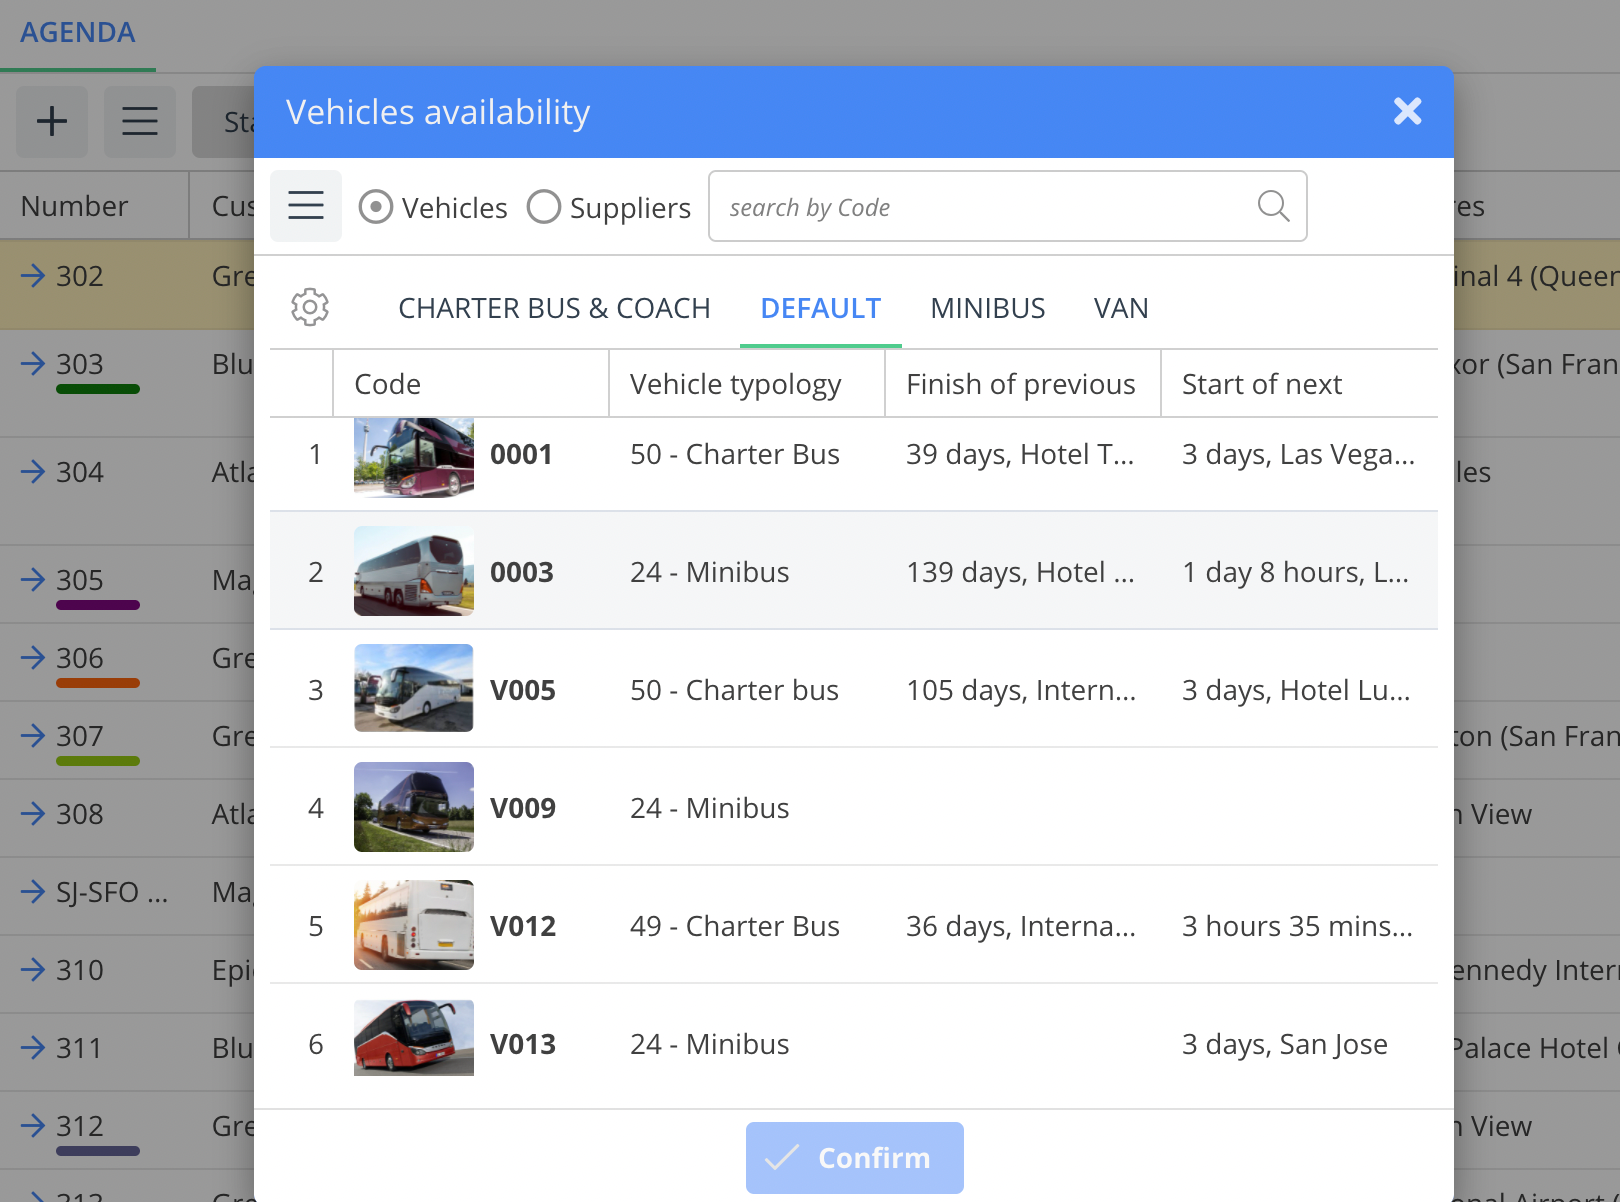 Vehicles availability window